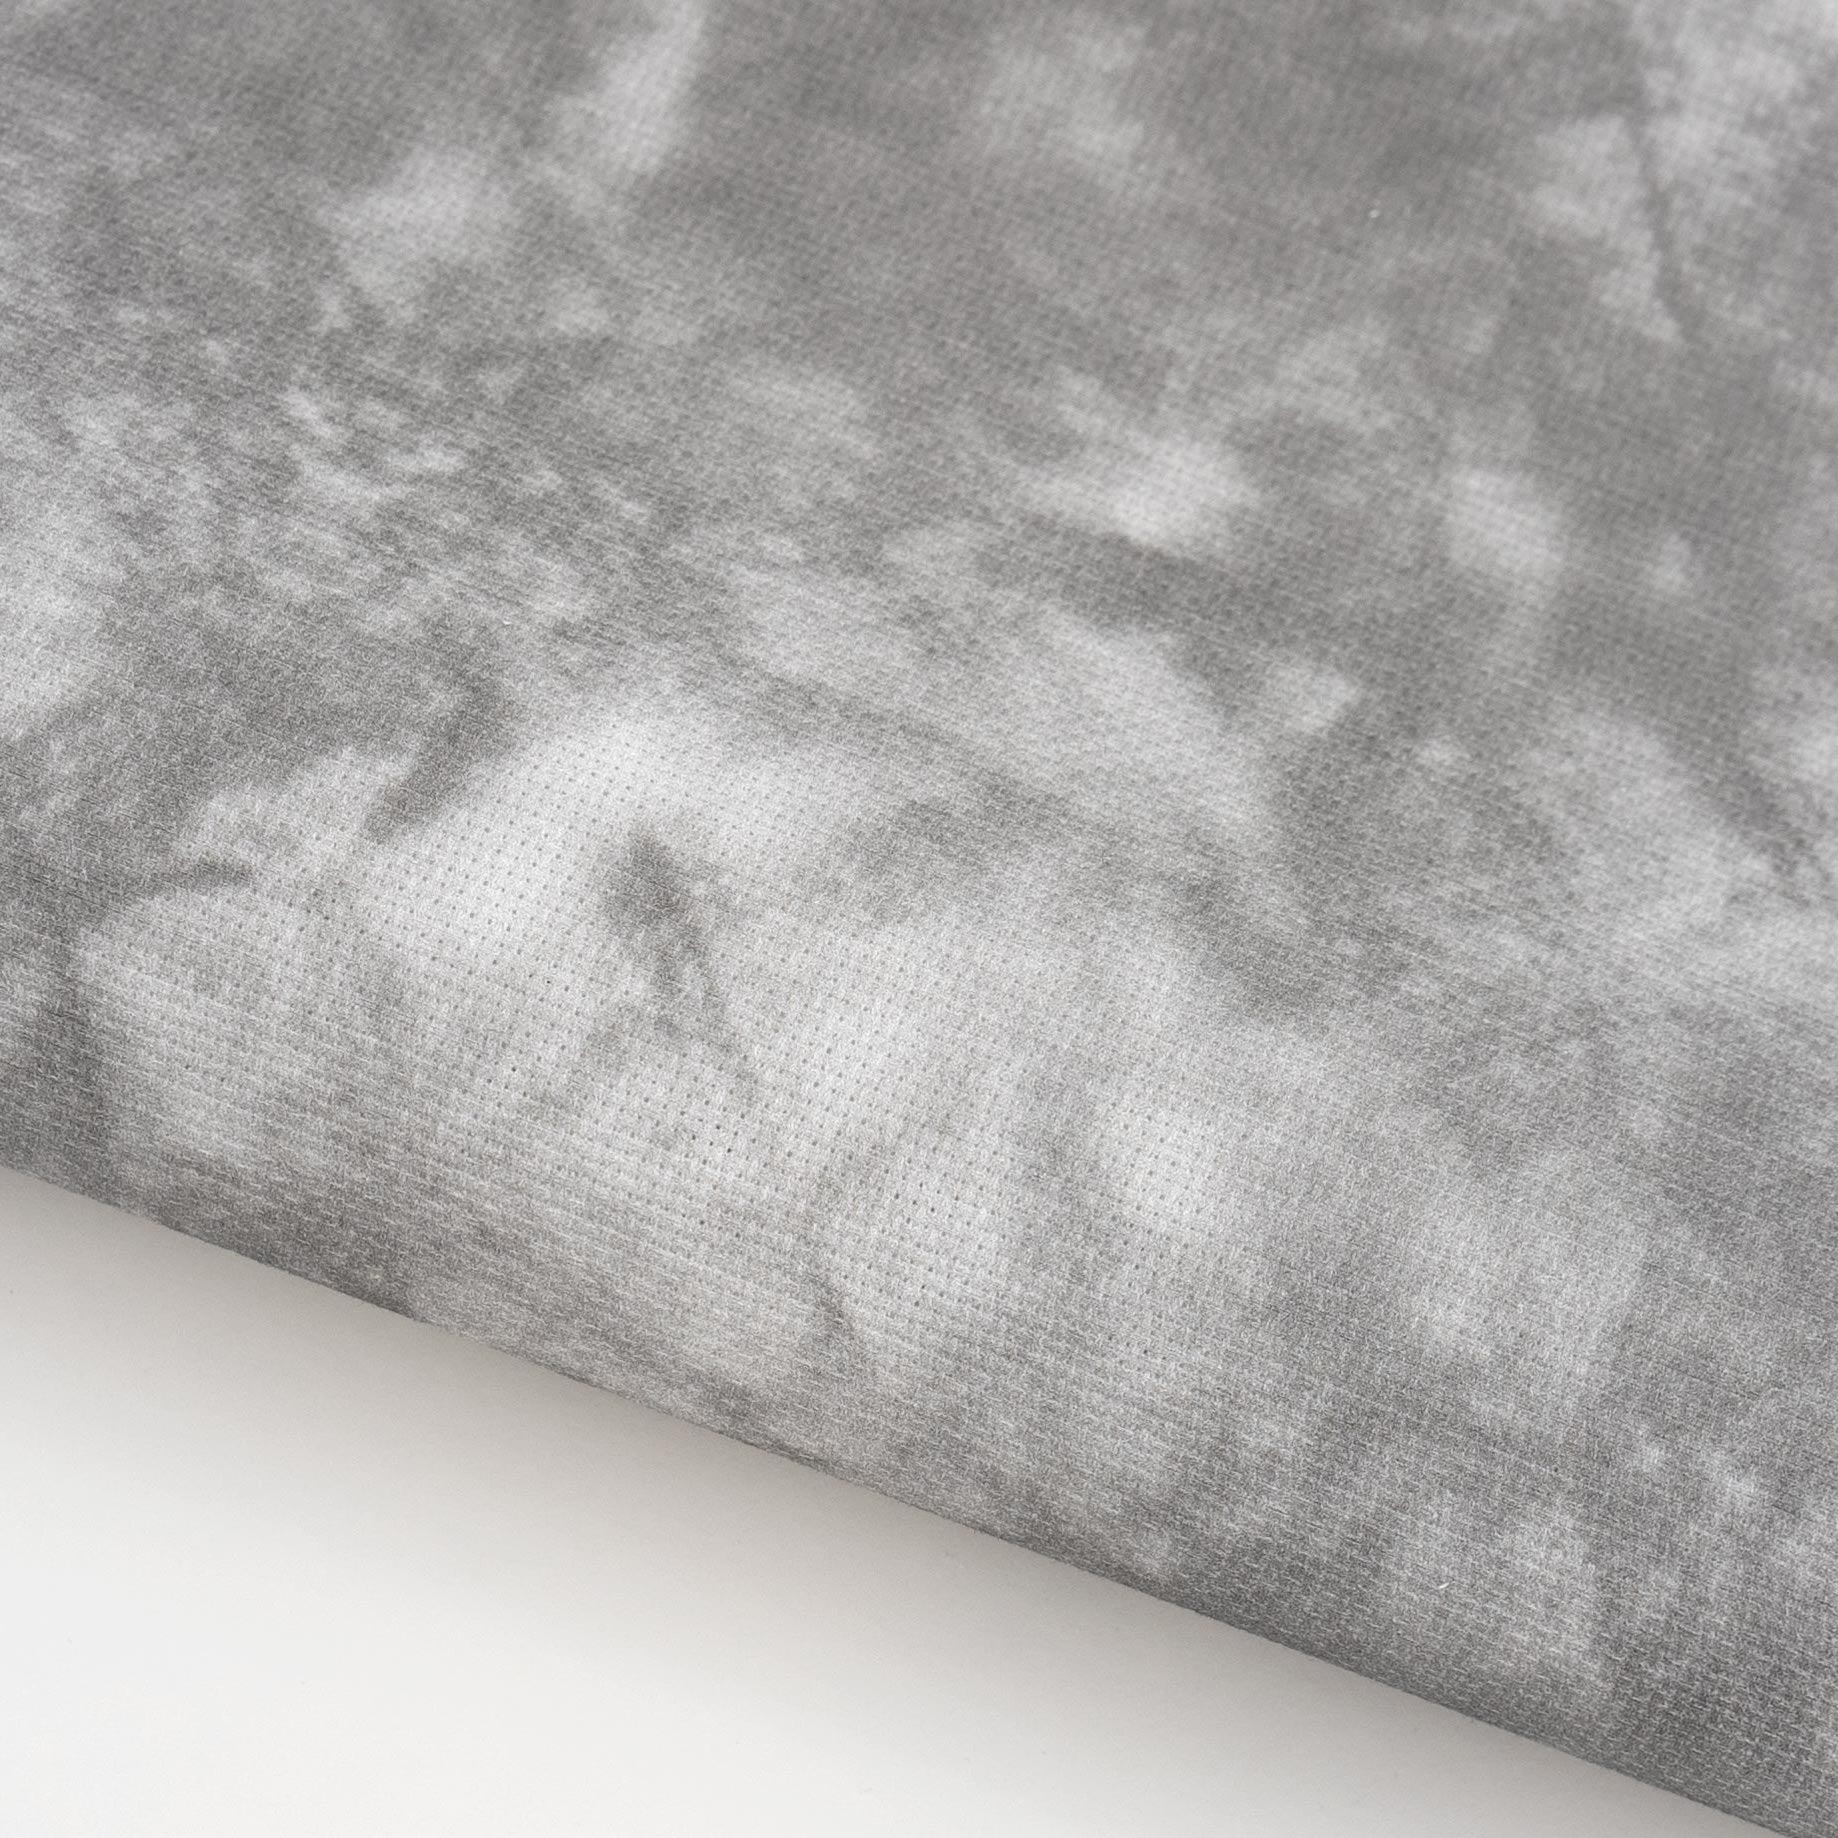 Gray Embossed Cross-stitch fabric